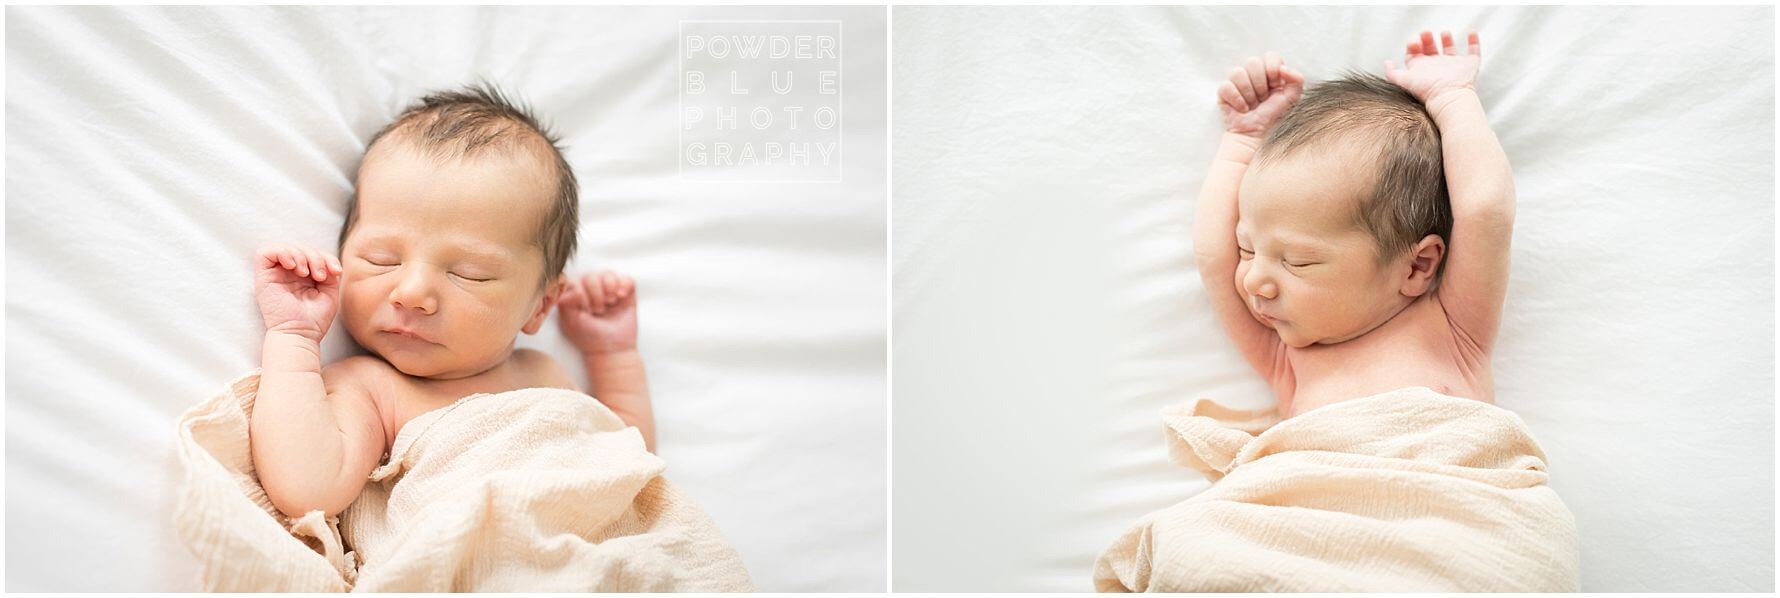 pittsburgh photography baby newborns. baby boy in natural lifestyle newborn photographer pose.